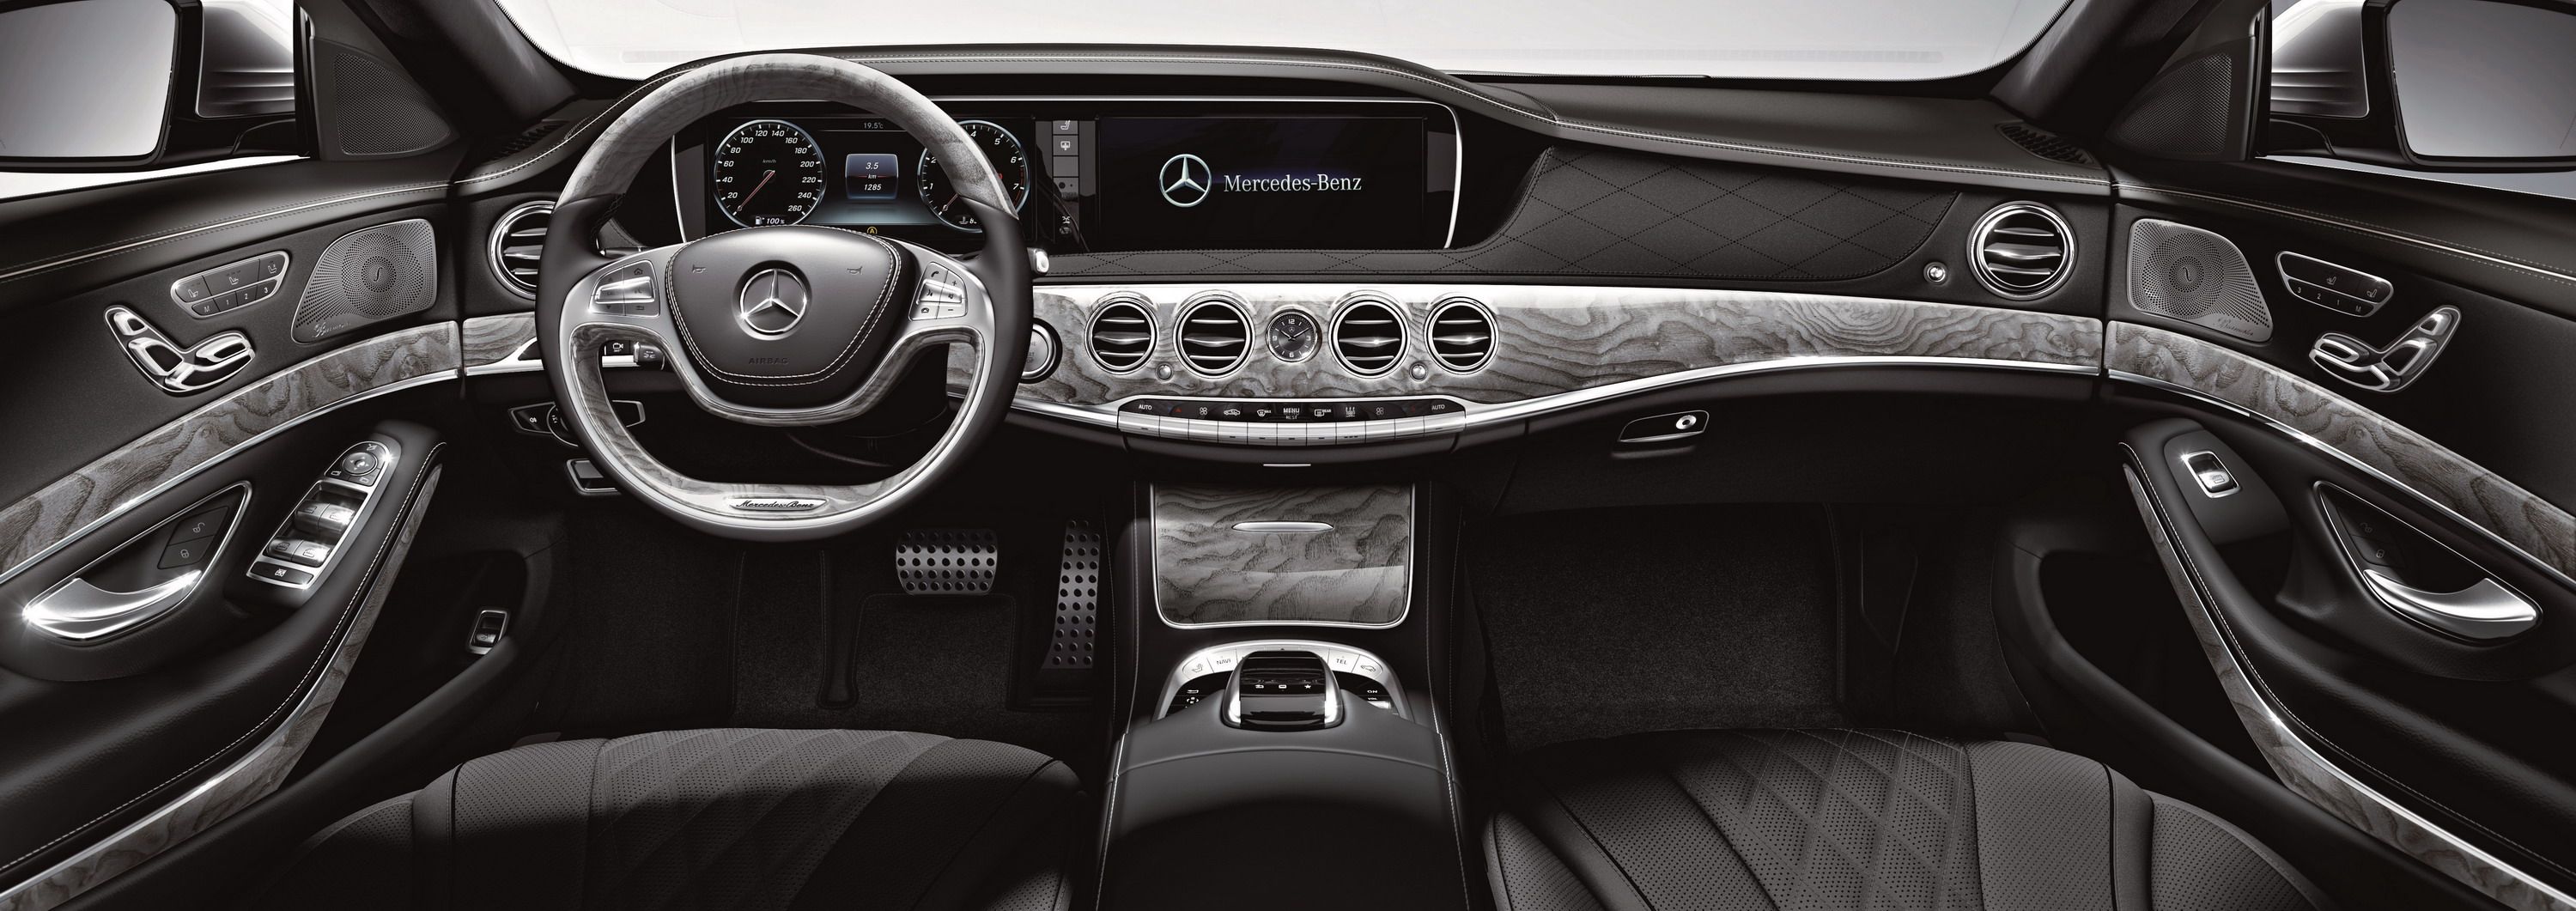 2014 Mercedes S550 Premium Sports Edition